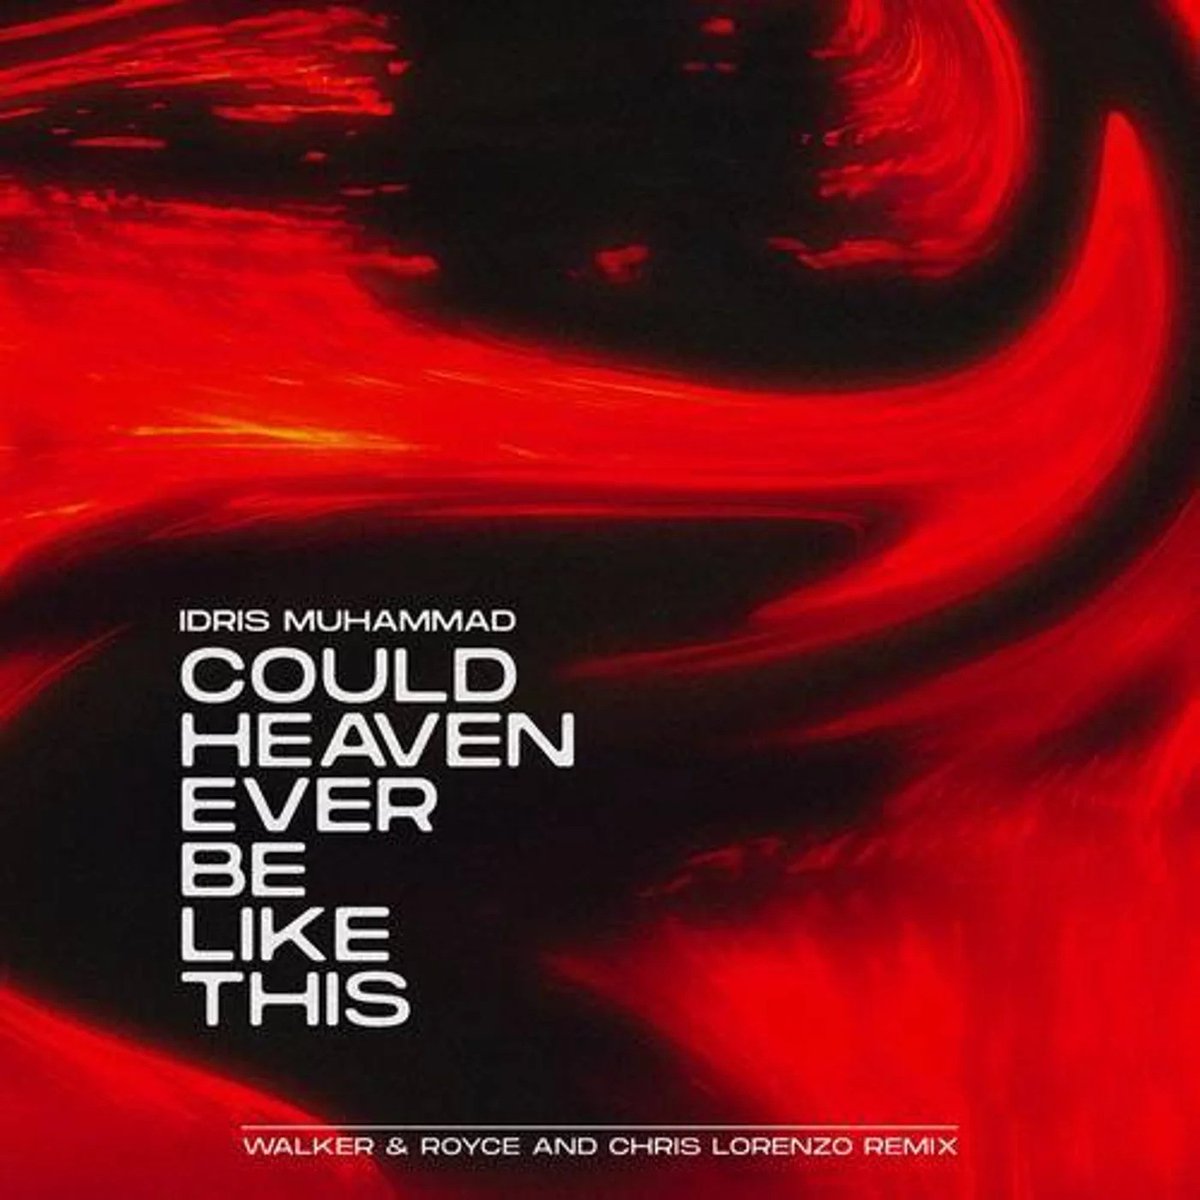 'Could Heaven Ever Be Like This' @WalkerAndRoyce @Lorenzosbeats #nowplaying live on @istreemradio 
 
 Listen ➡️ bit.ly/istreemradio
#istreemmusic #HouseMusic #FridayNightLive